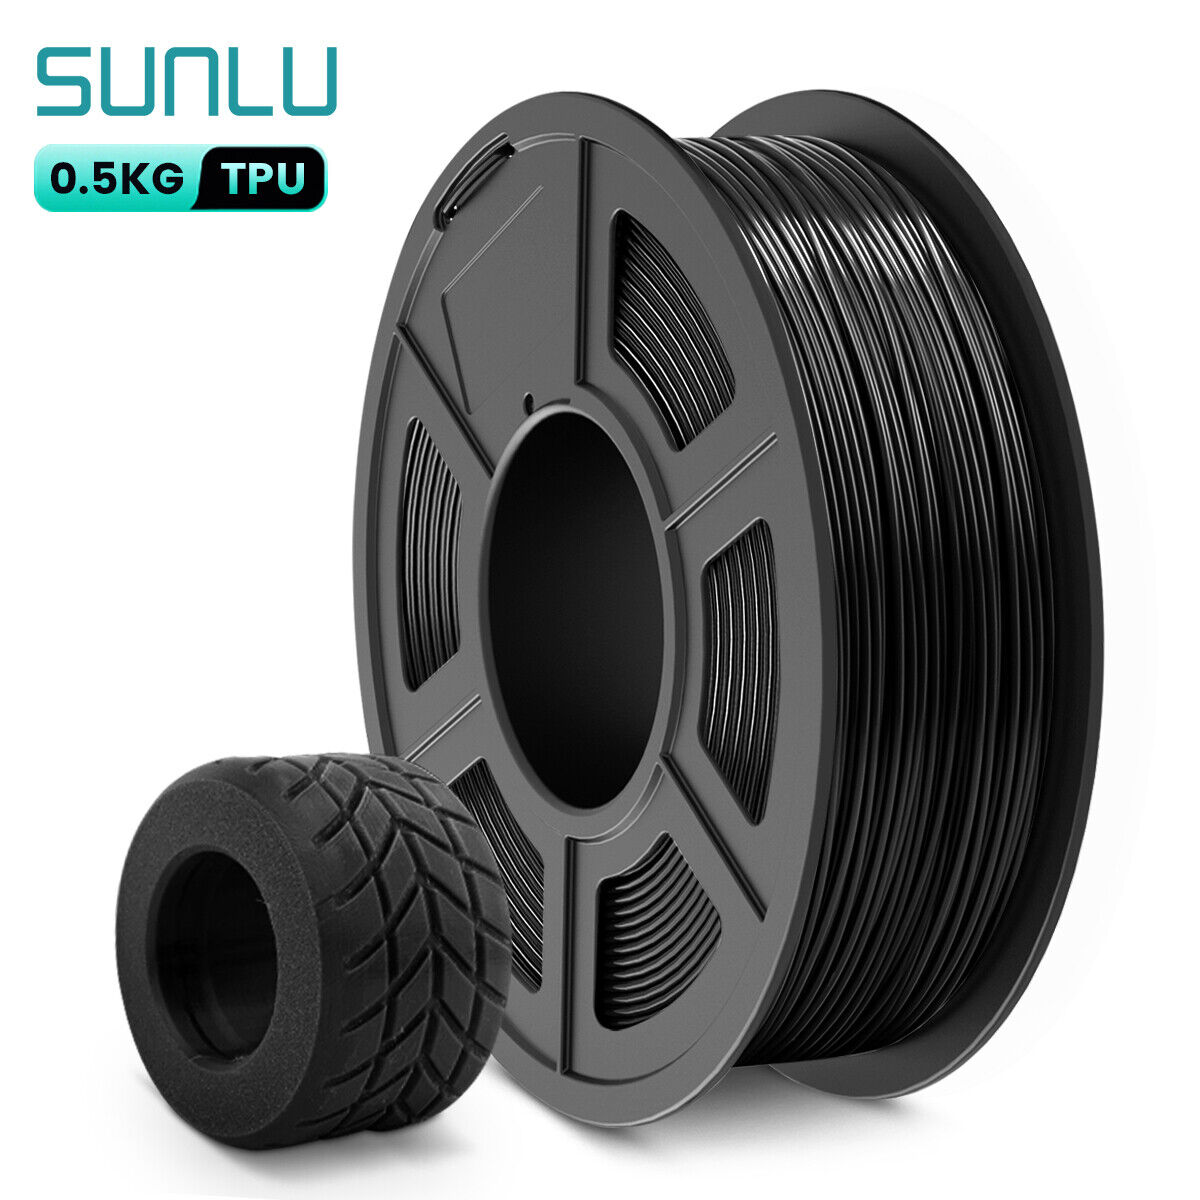 【BUY 4 GET 2 FREE,ADD 6】SUNLU 1.75MM Flexible TPU 3D Printer Filament Black 500G